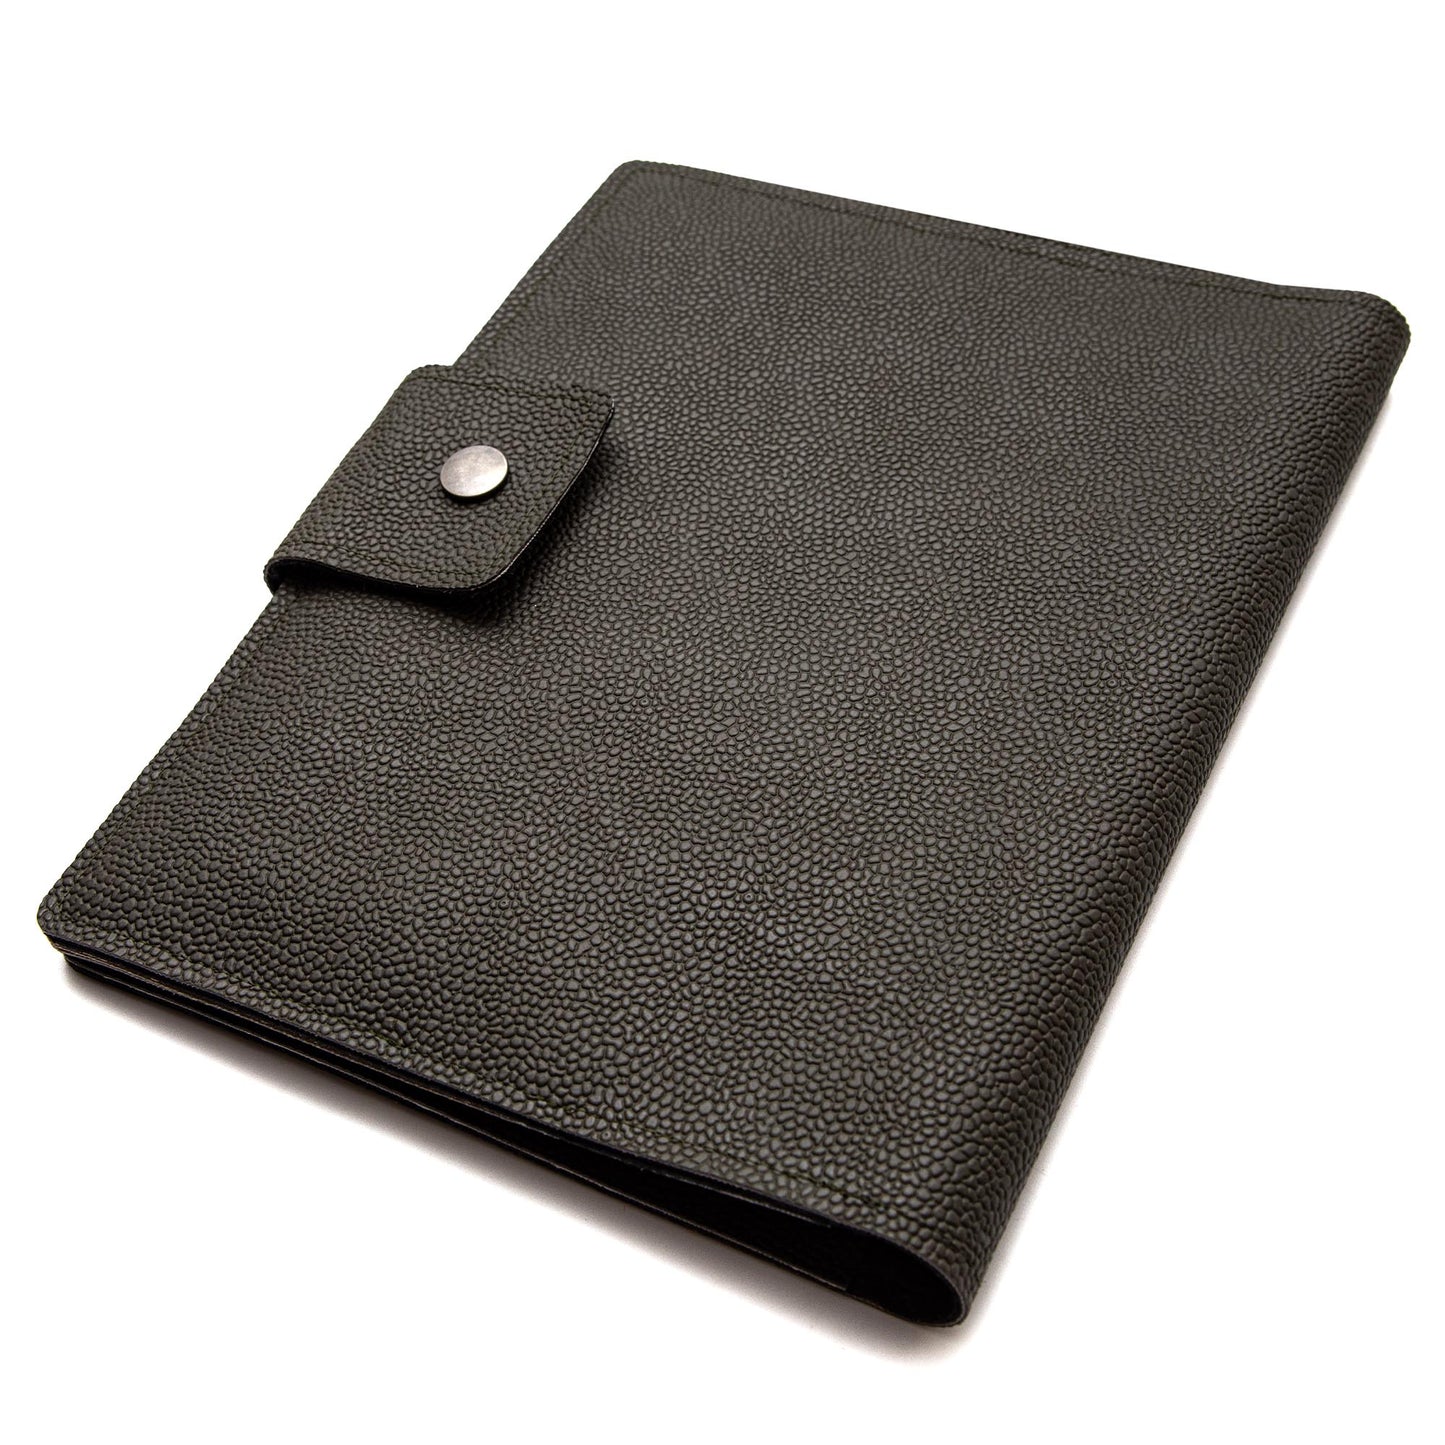 Handmade iPad Cover - Dark Green Faux Leather Folio for Apple iPad Air/Pro/Mini